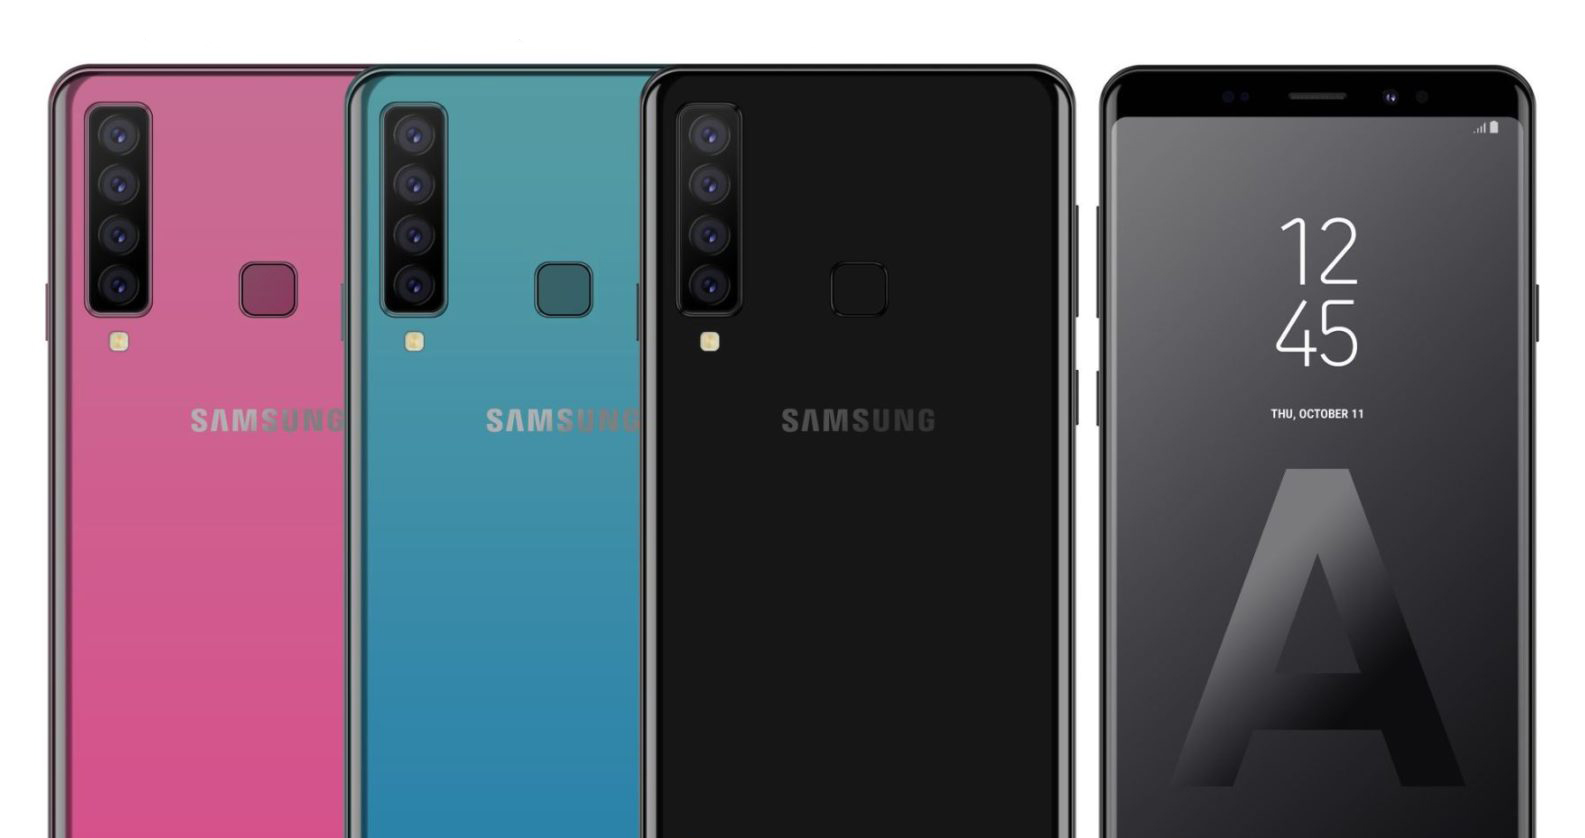 Samsung Galaxy A9s 